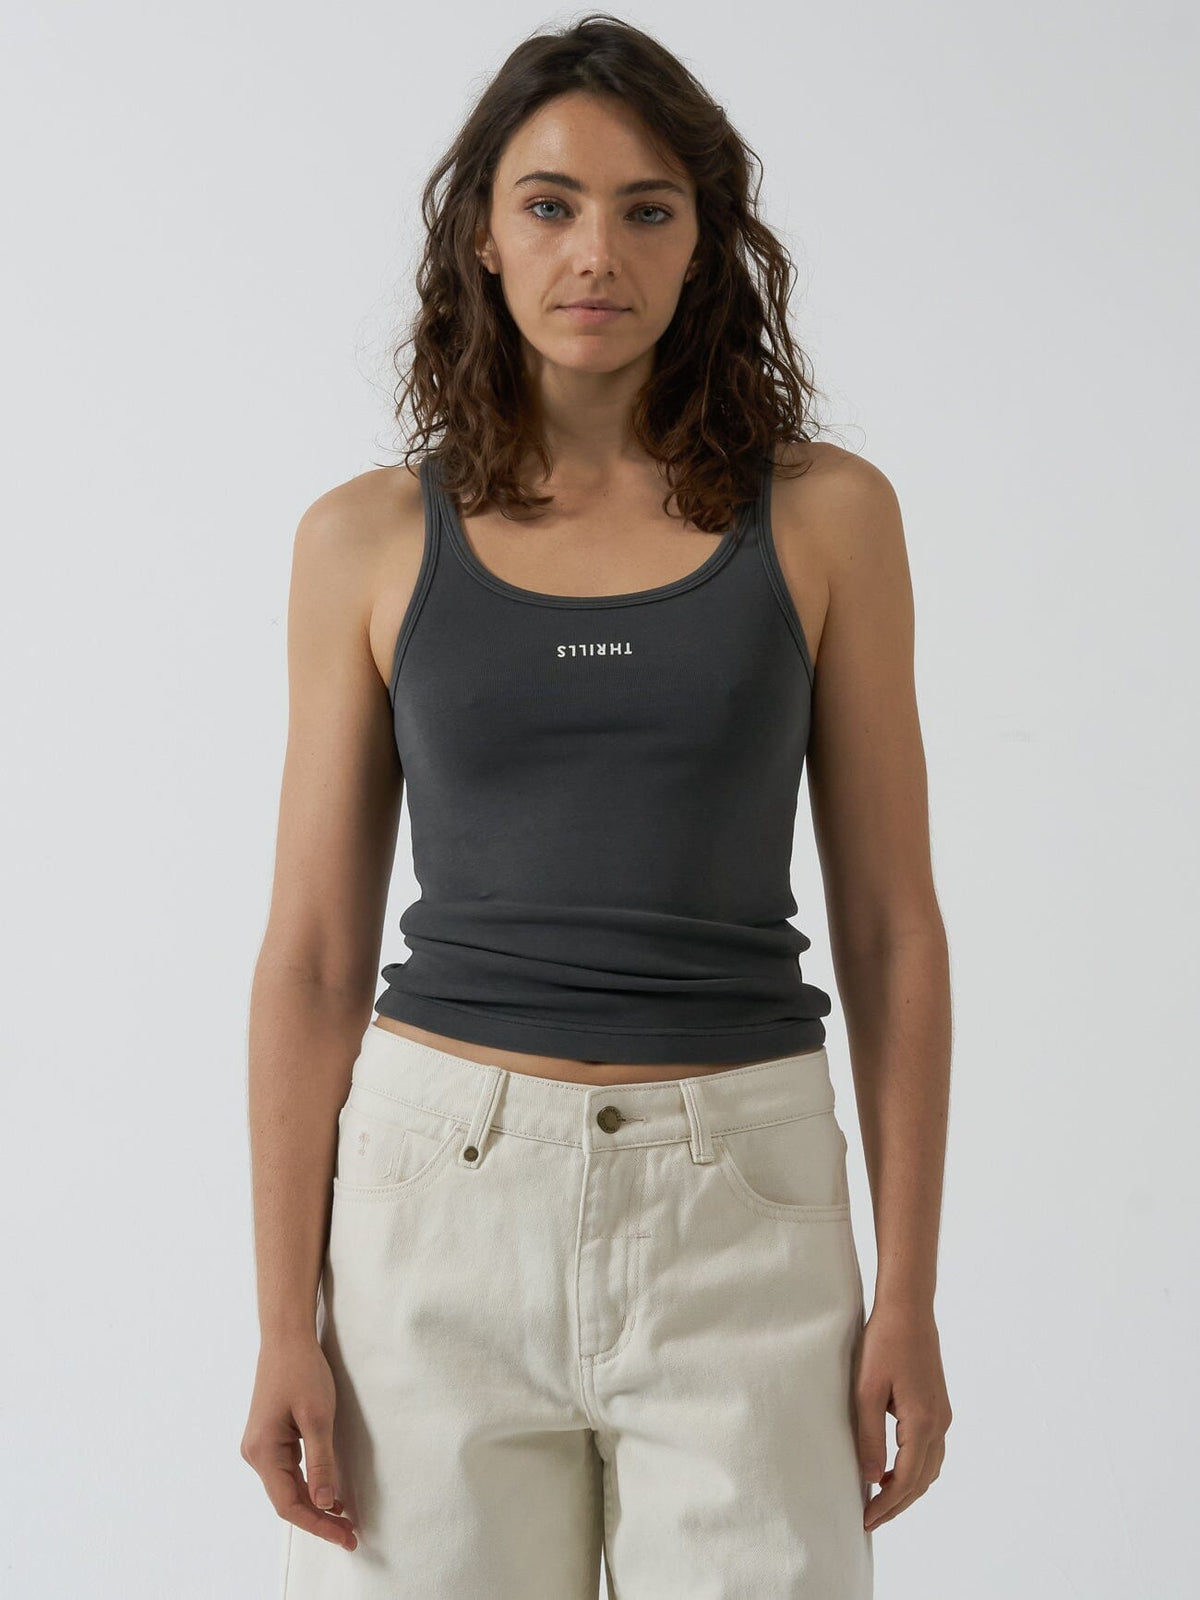 Womens Tees Australia | Womens T-shirts Online – Page 2